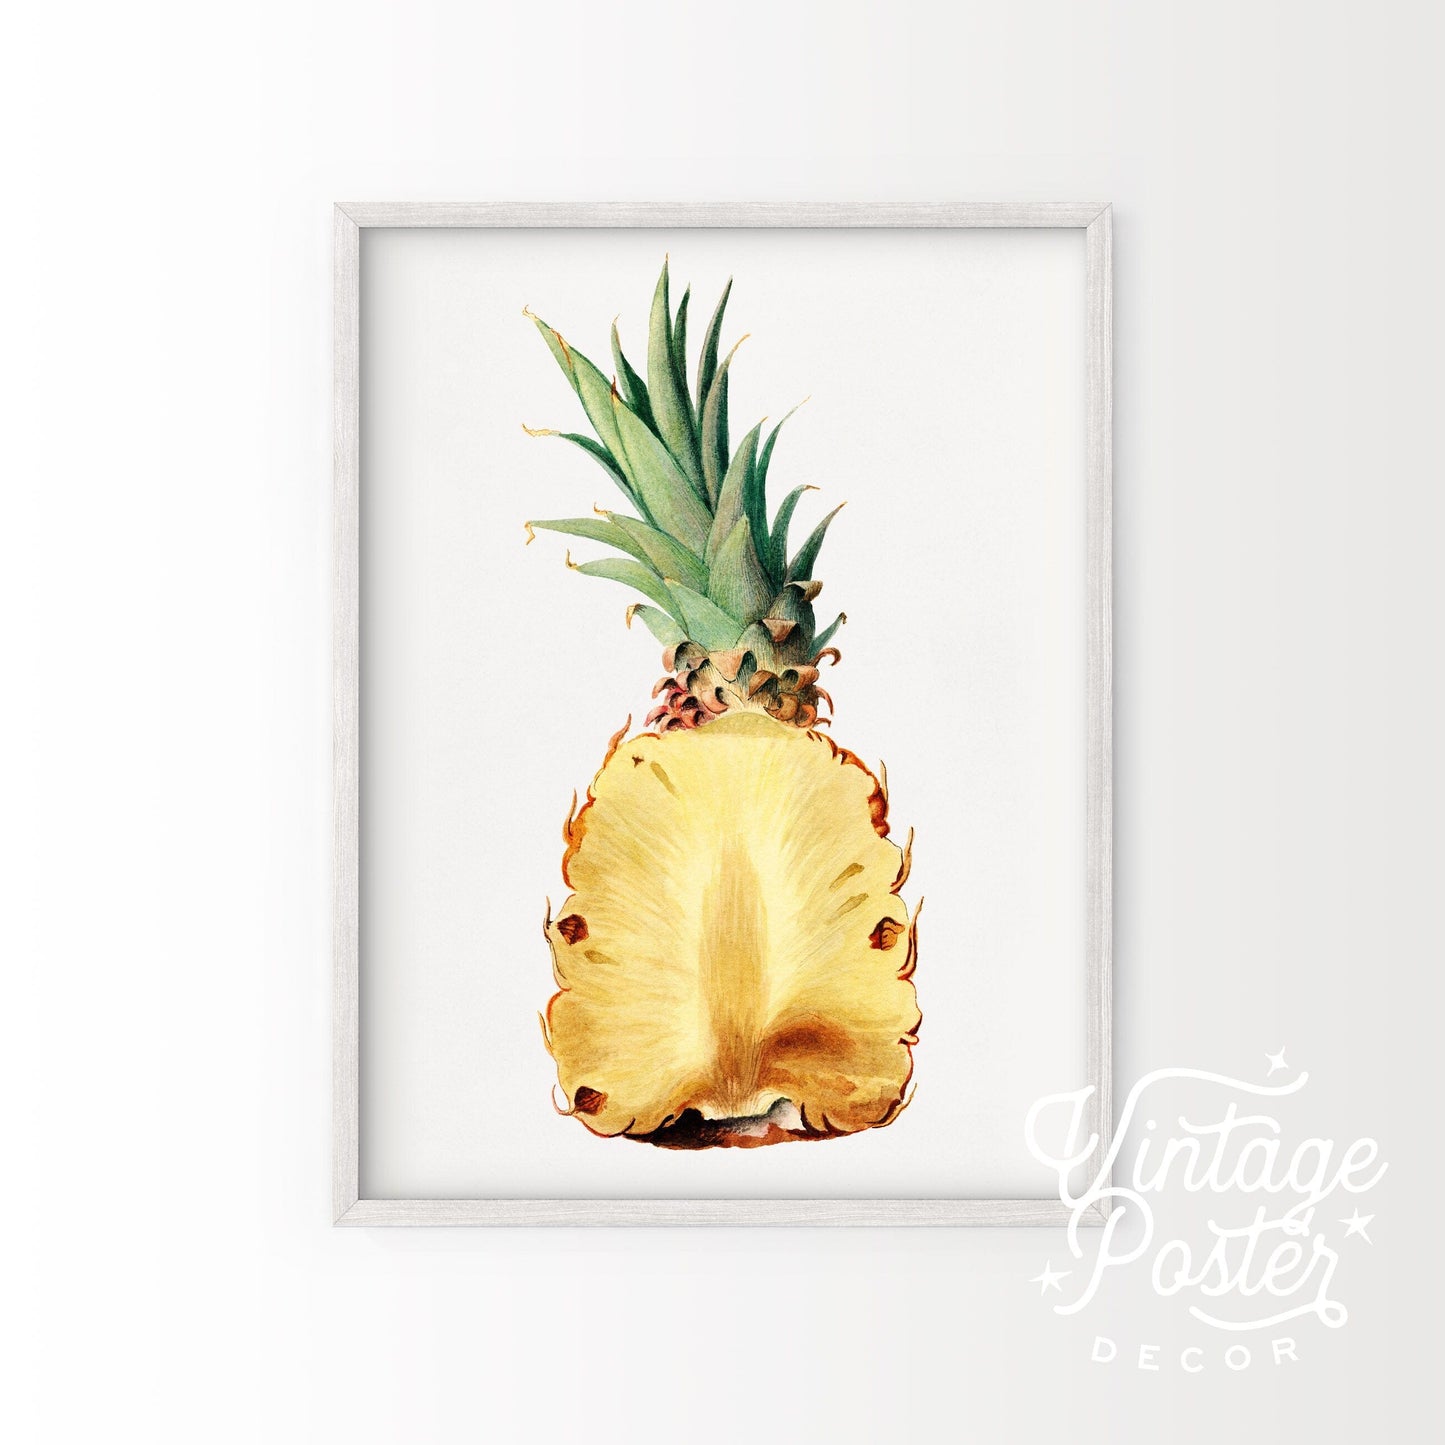 Home Poster Decor Single Pineapple Print, Fruit Poster, Botanical Fruit, Kitchen Wall Decor, Minimalist Decor, Citrus Wall Art, Tropical fruits, High Quality Paper